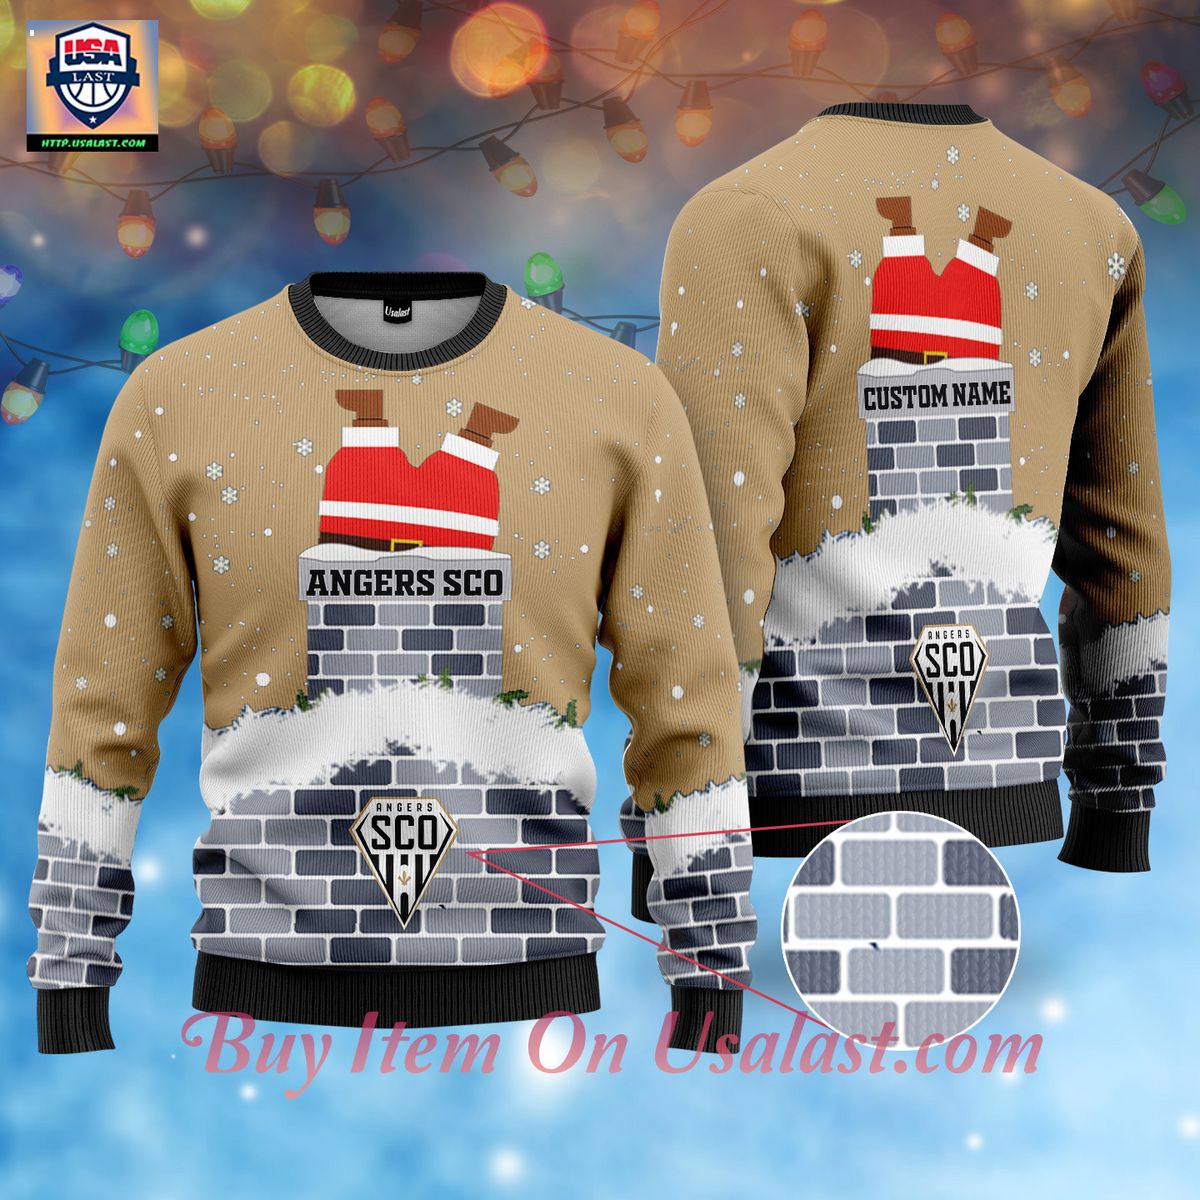 Angers SCO Santa Claus Custom Name Ugly Christmas Sweater - Gang of rockstars